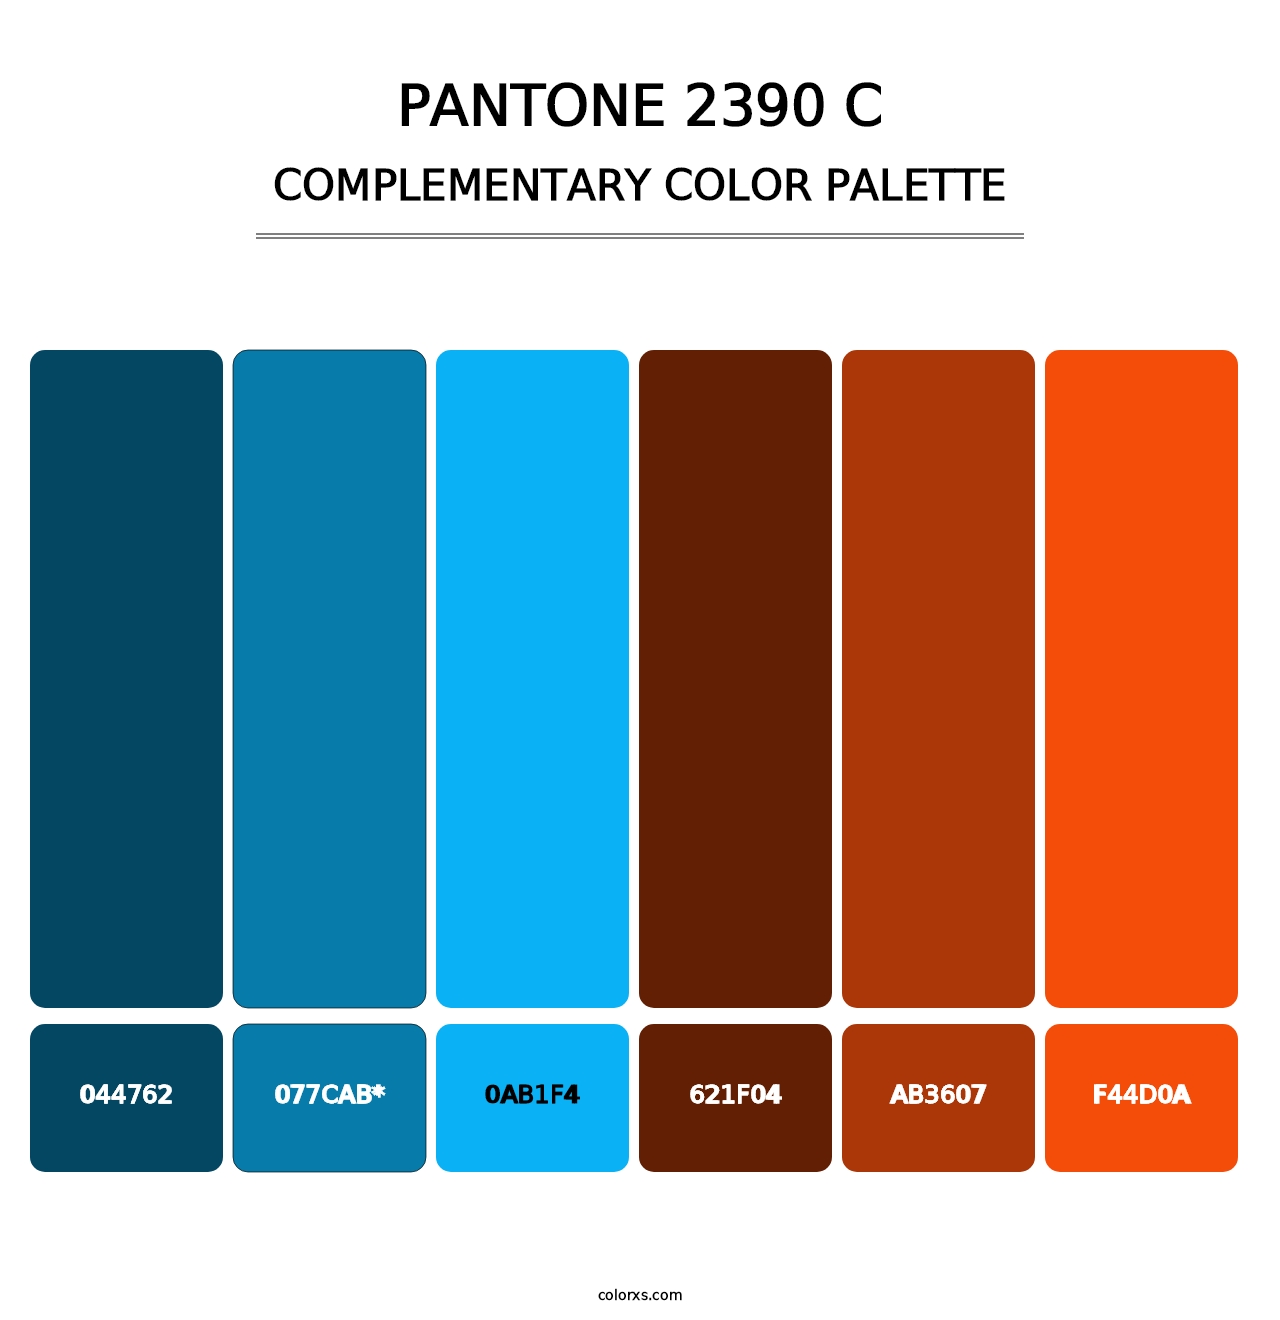 PANTONE 2390 C - Complementary Color Palette